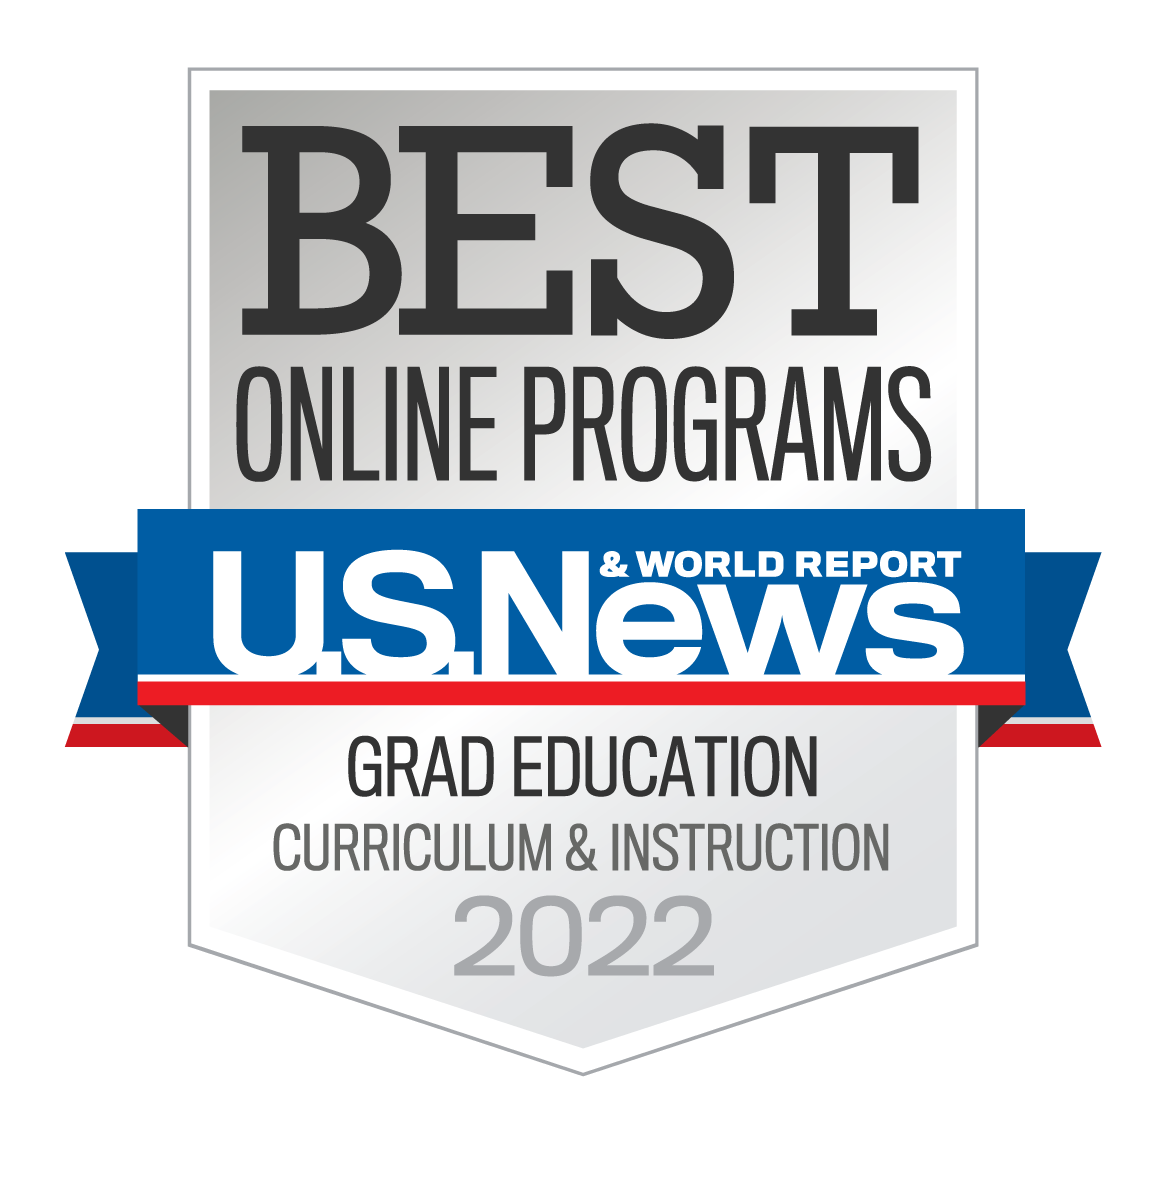 U.S. News Best Online Programs - Grad Education -Curriculum and Instruction 2022